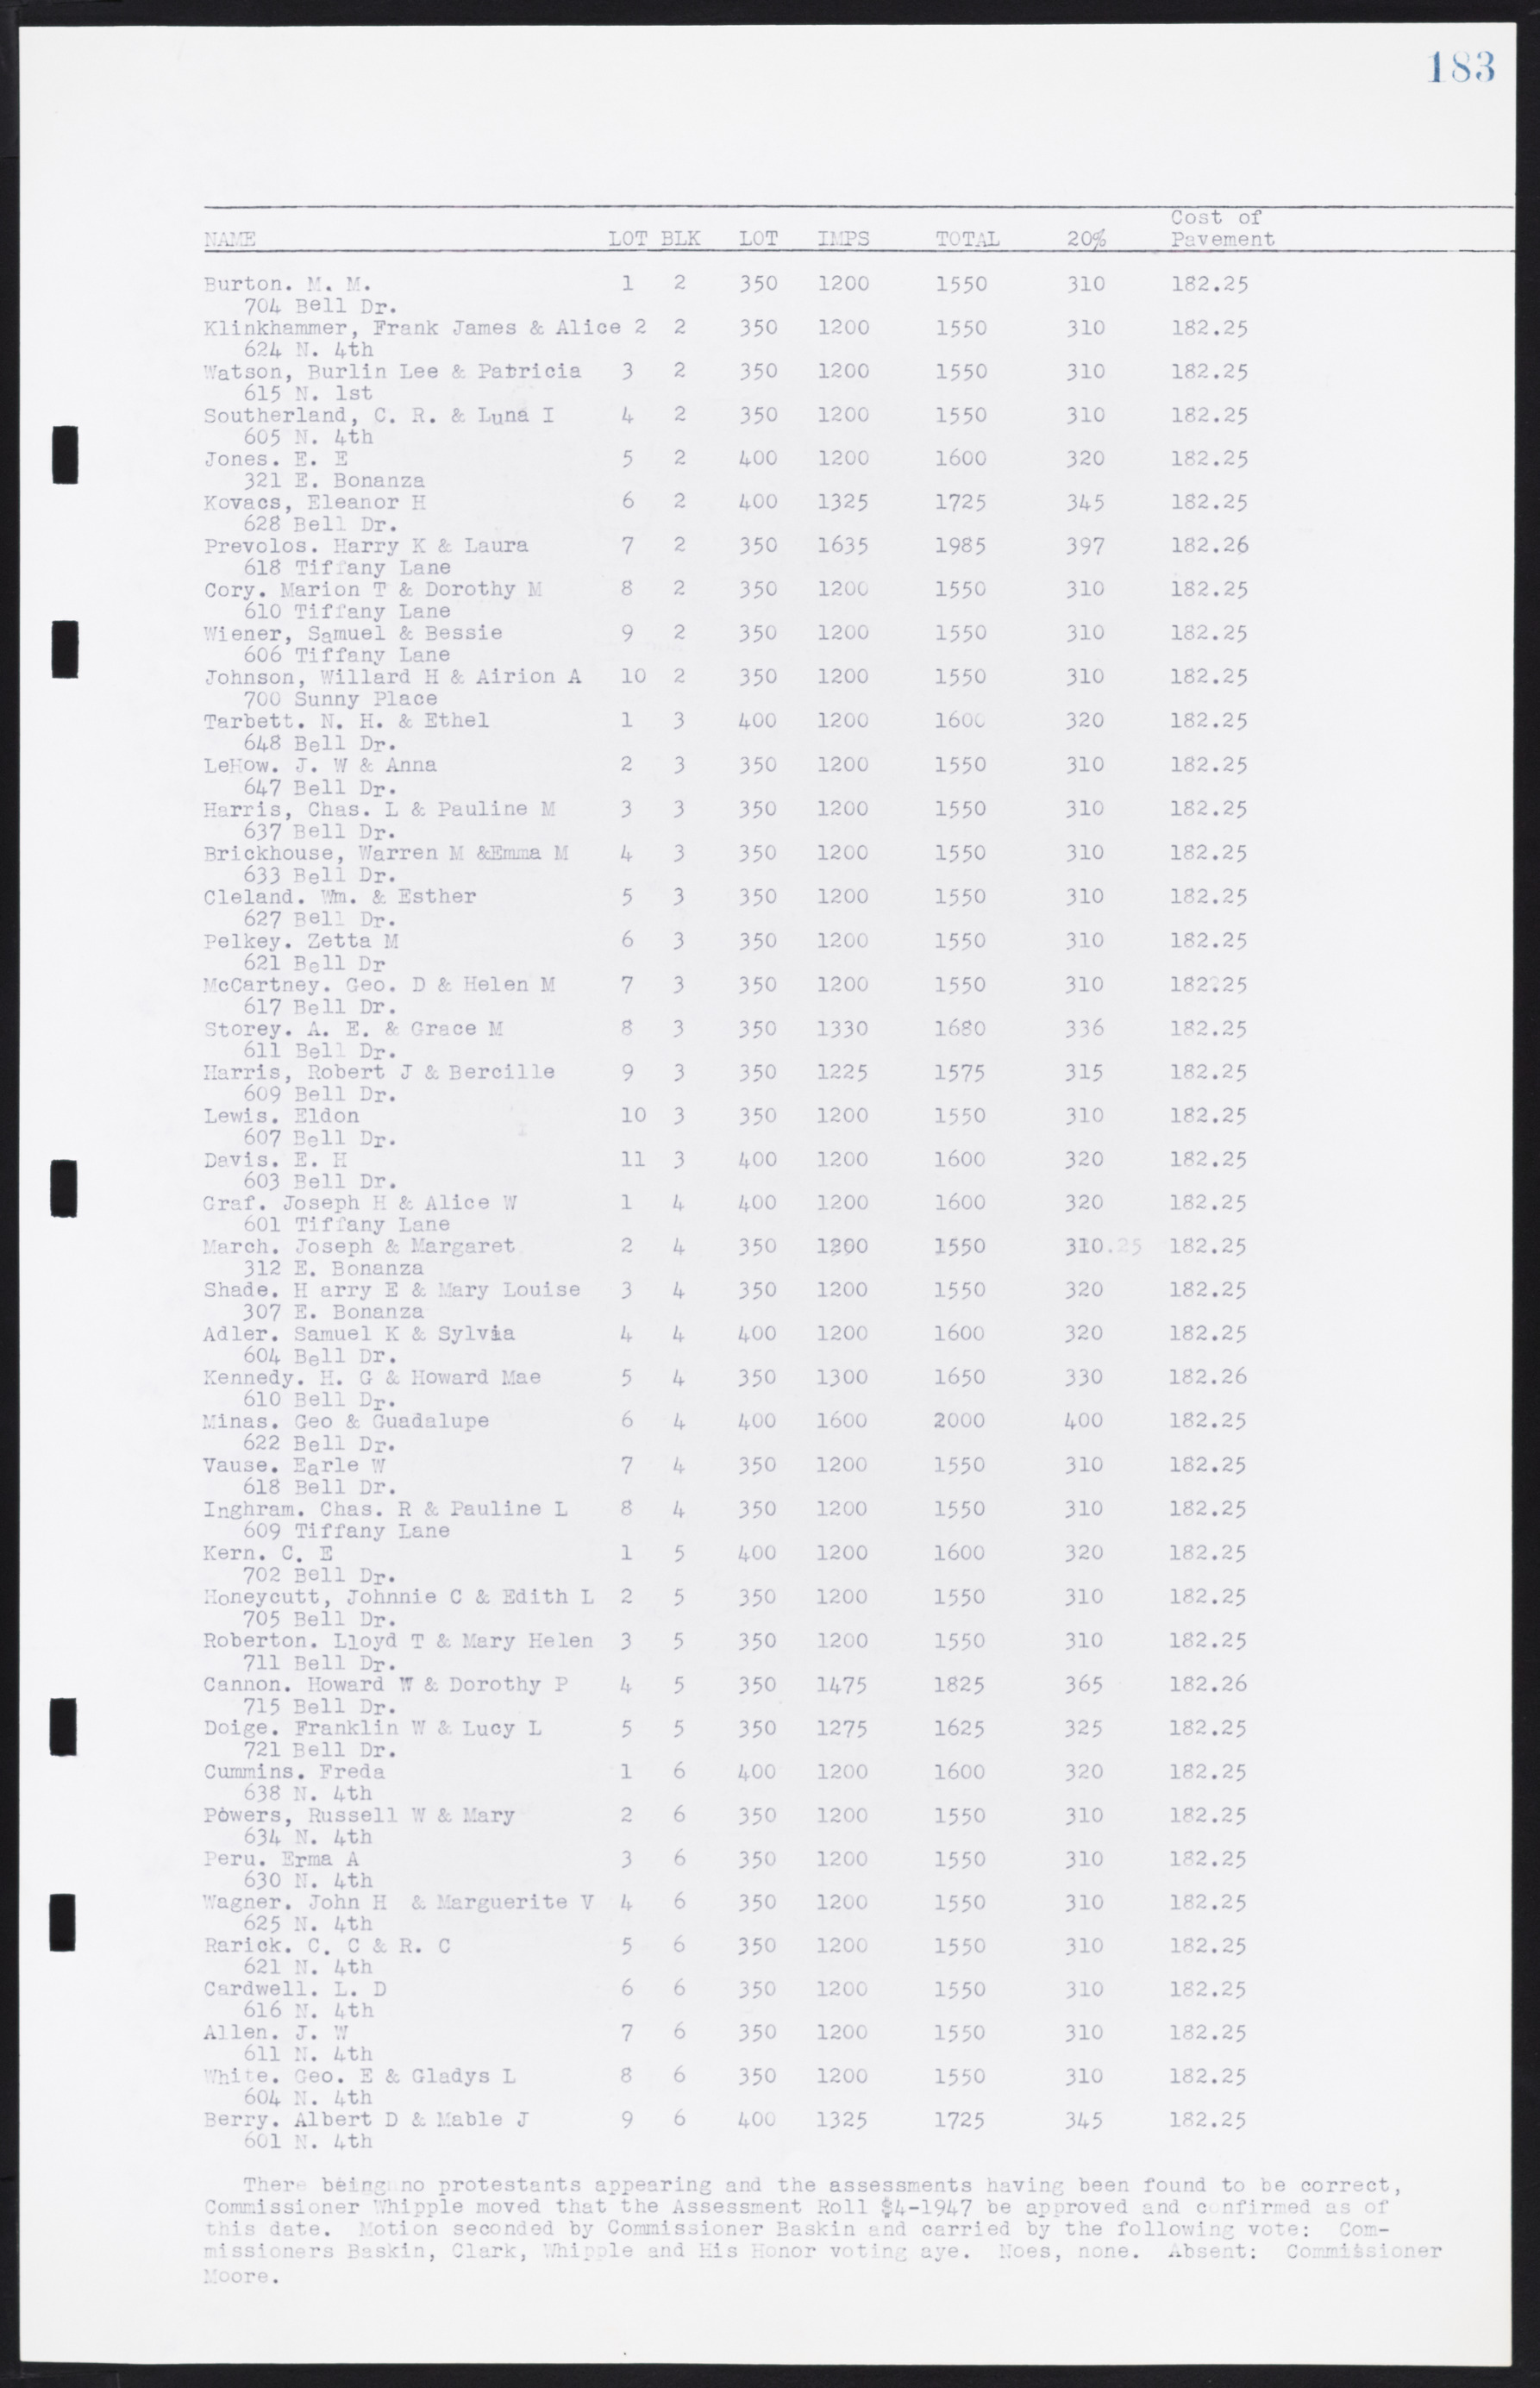 Las Vegas City Commission Minutes, January 7, 1947 to October 26, 1949, lvc000006-203